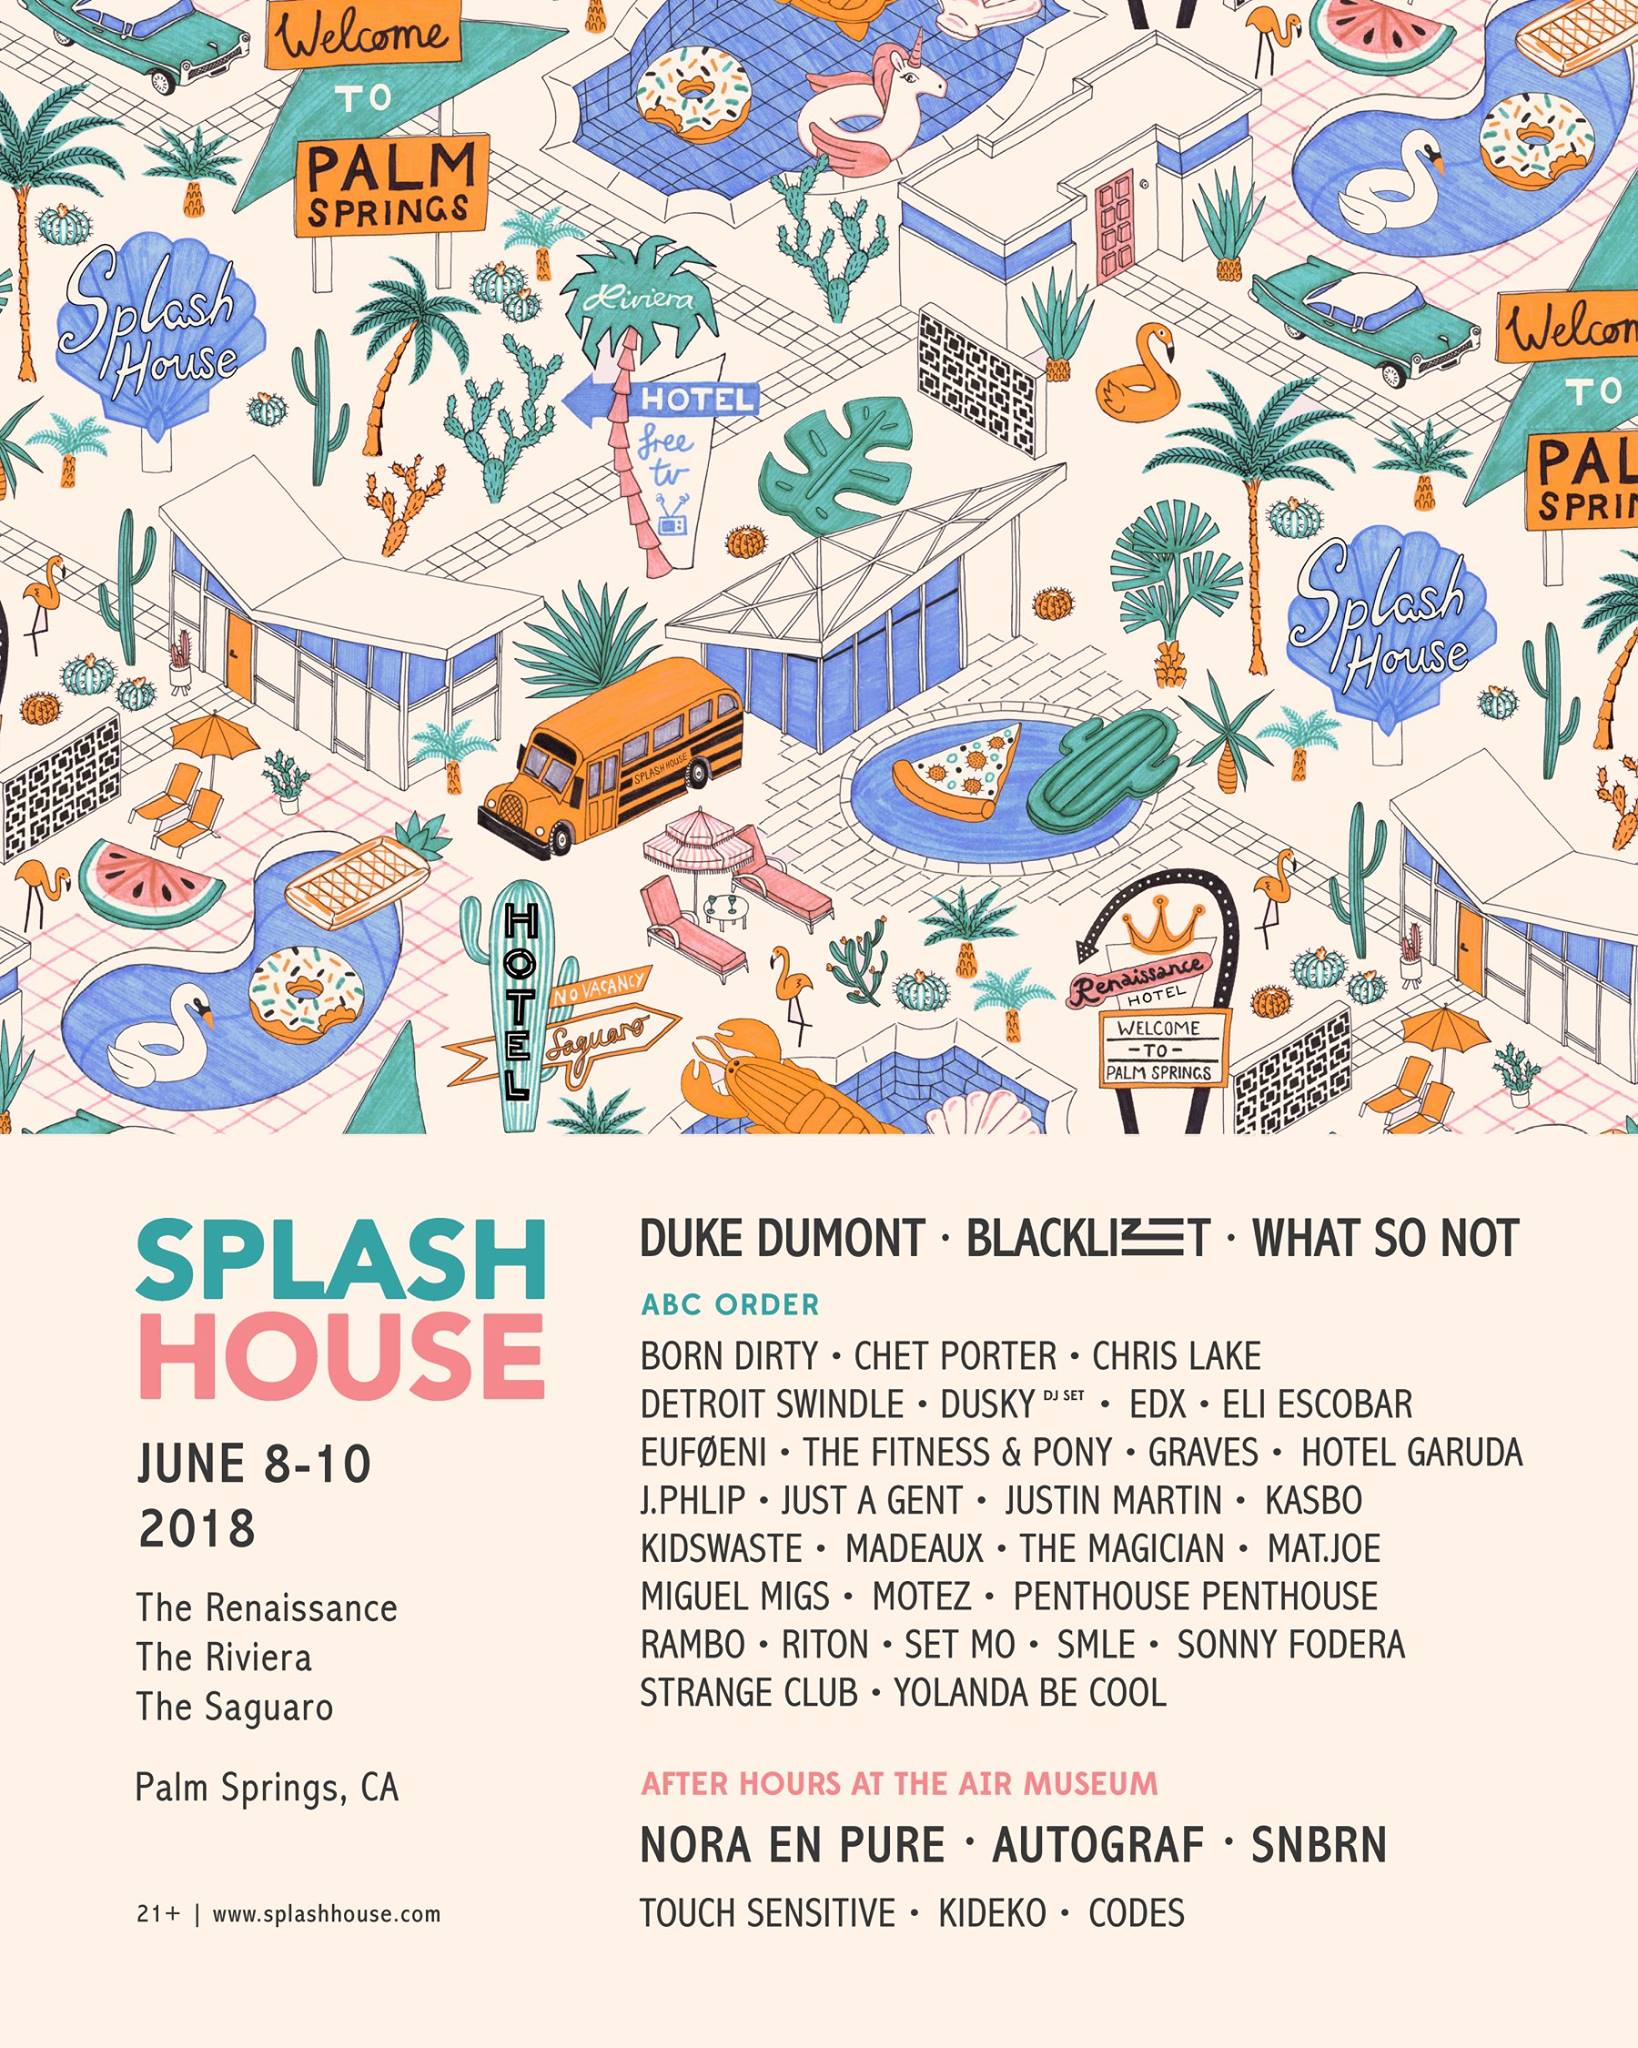 Splash House June 2018 Lineup